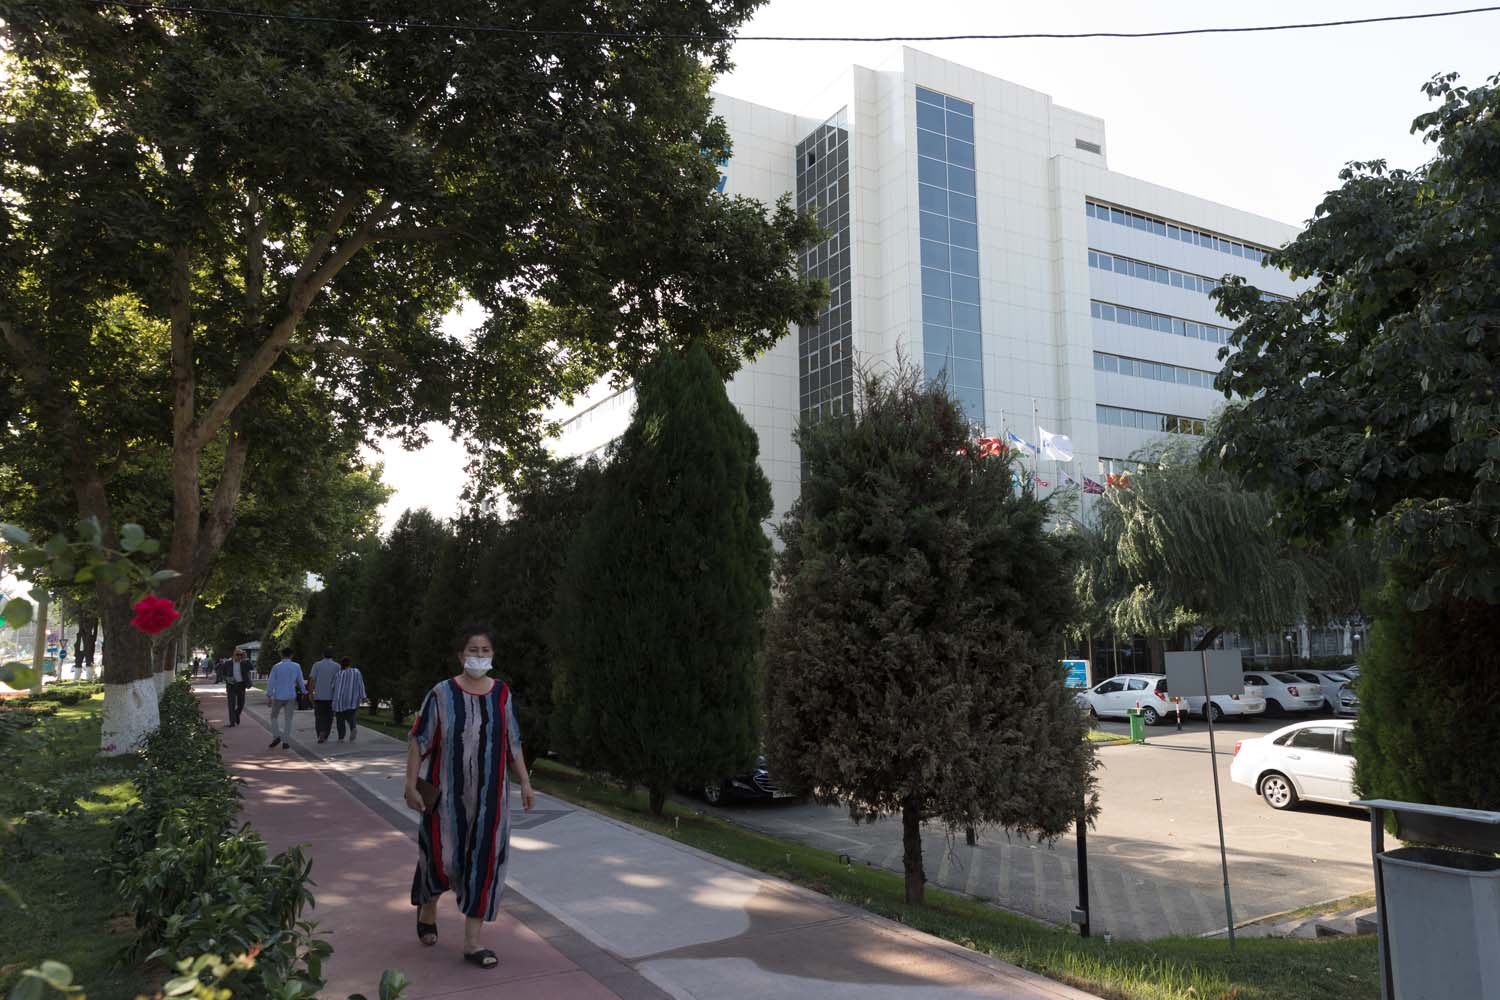 Hotel Dustlik, Tashkent, 2021